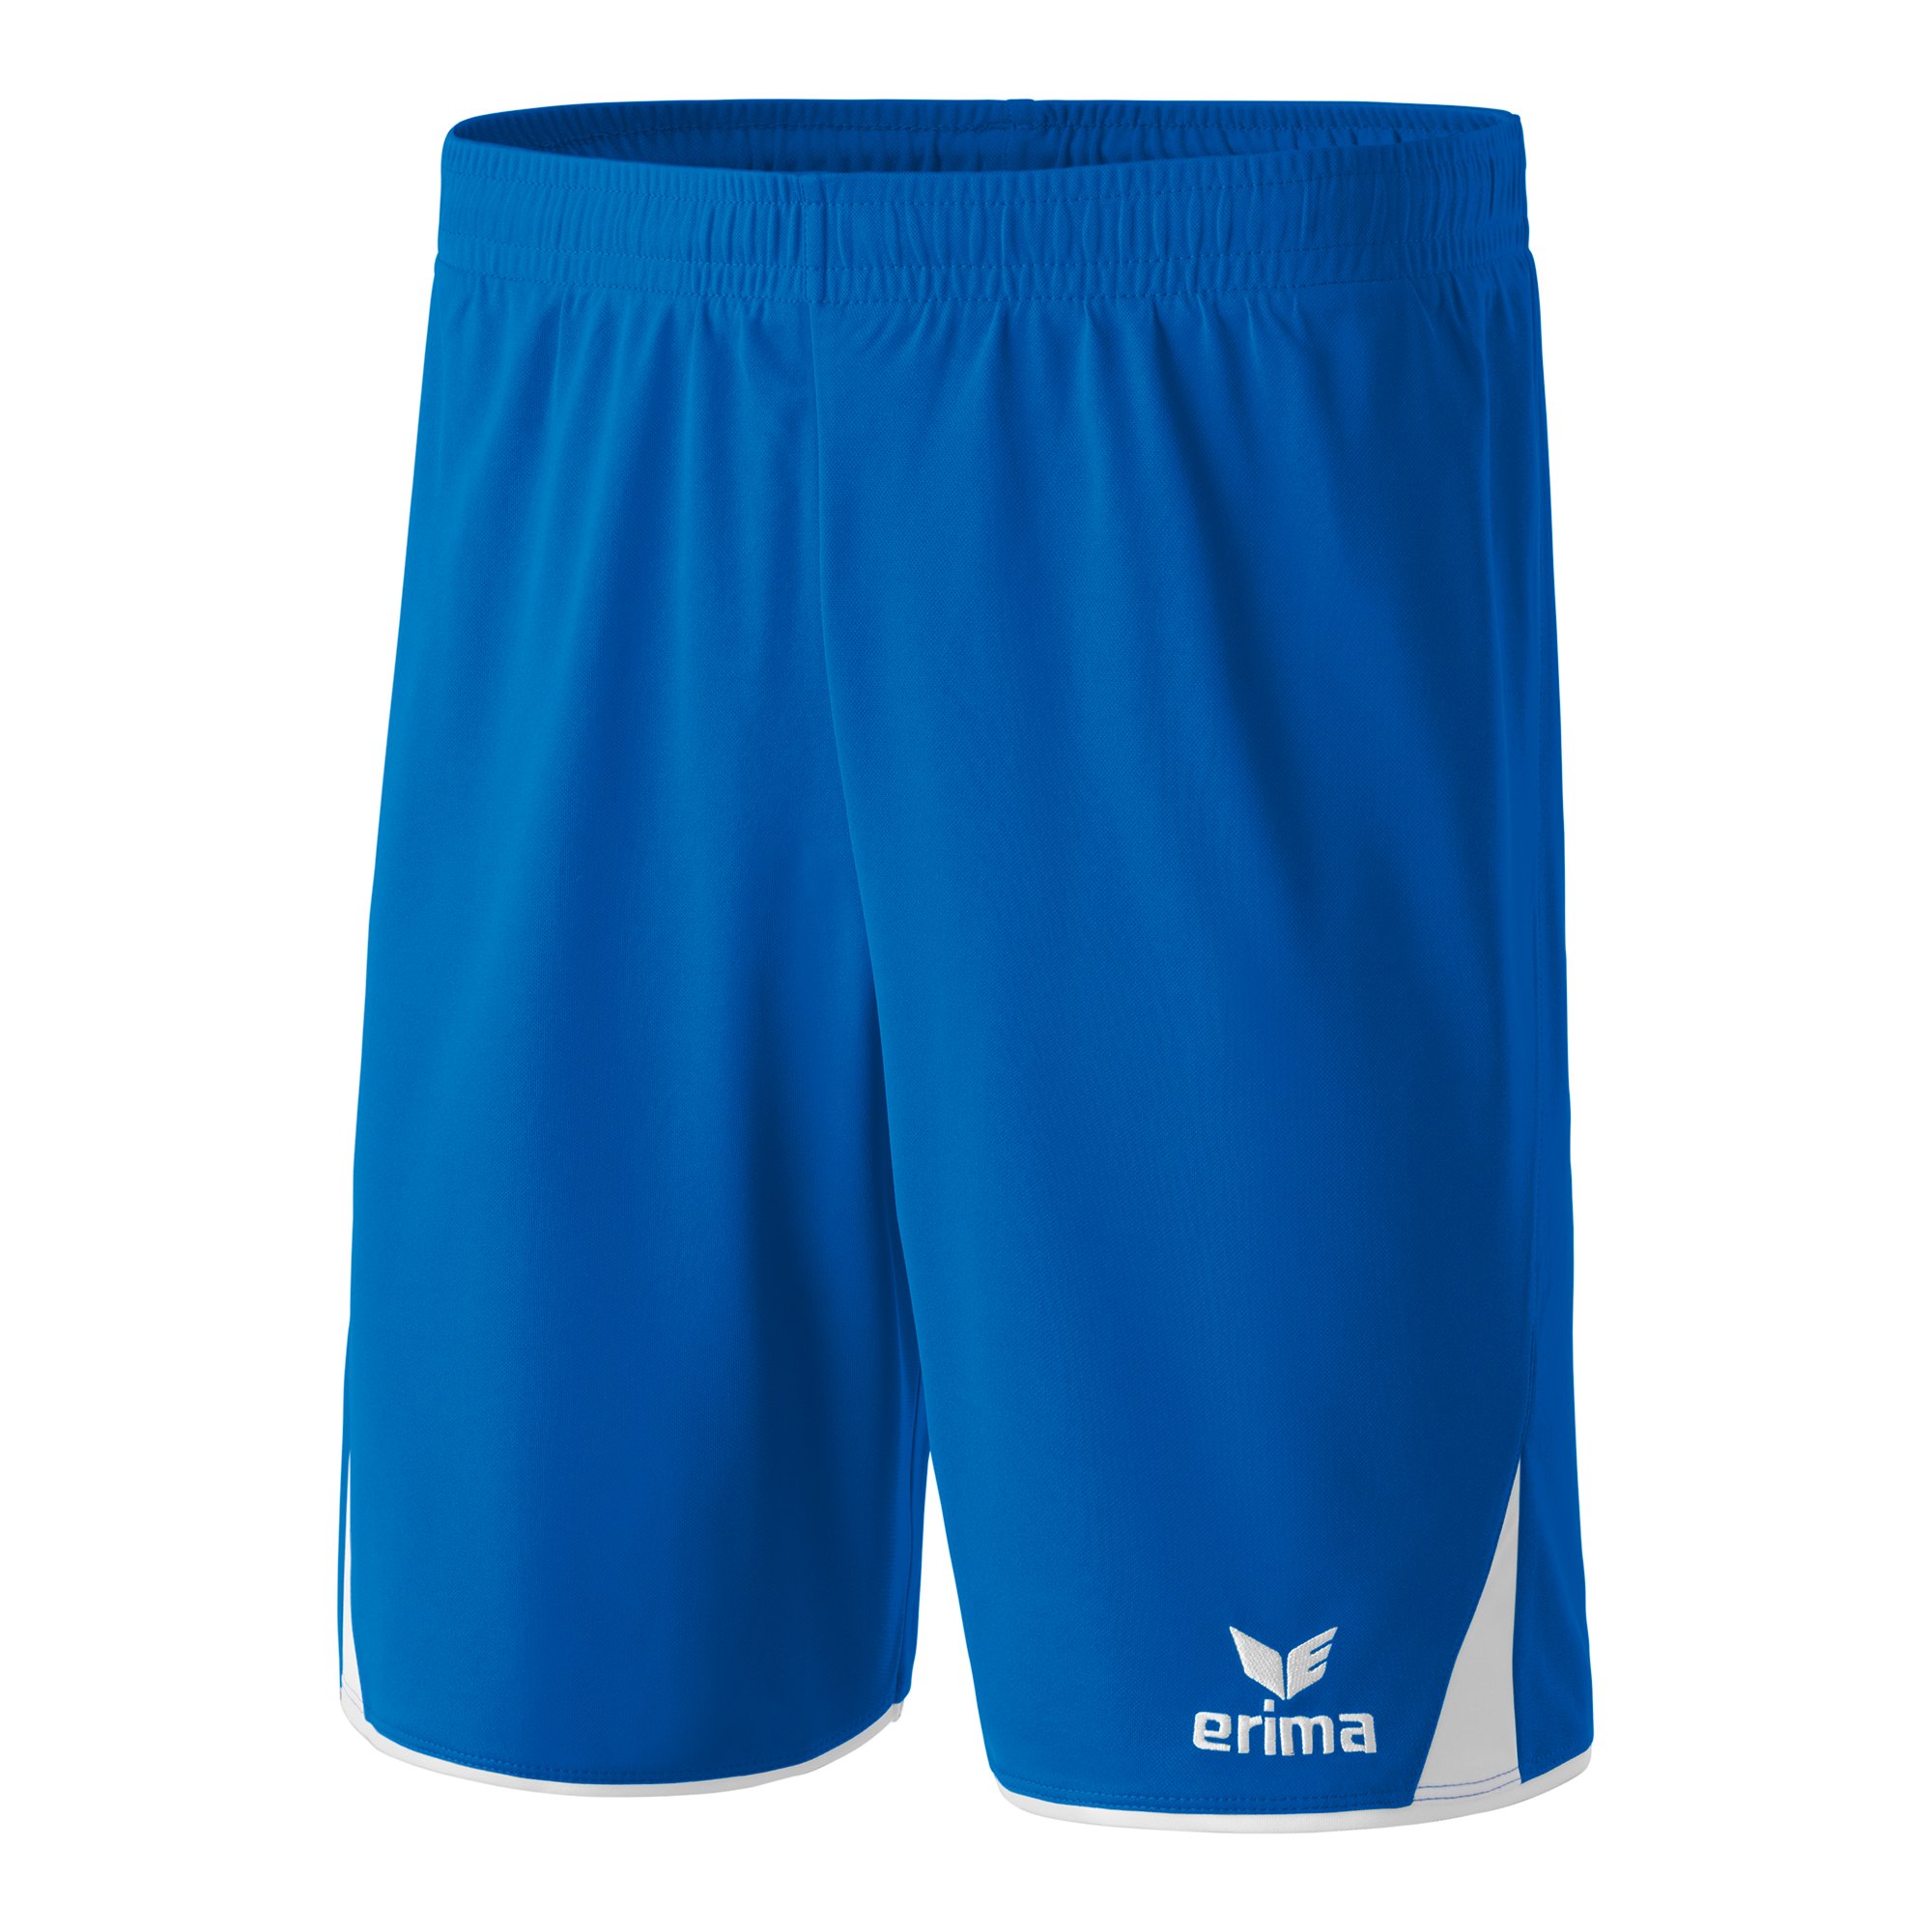 Erima 5-Cubes Shorts